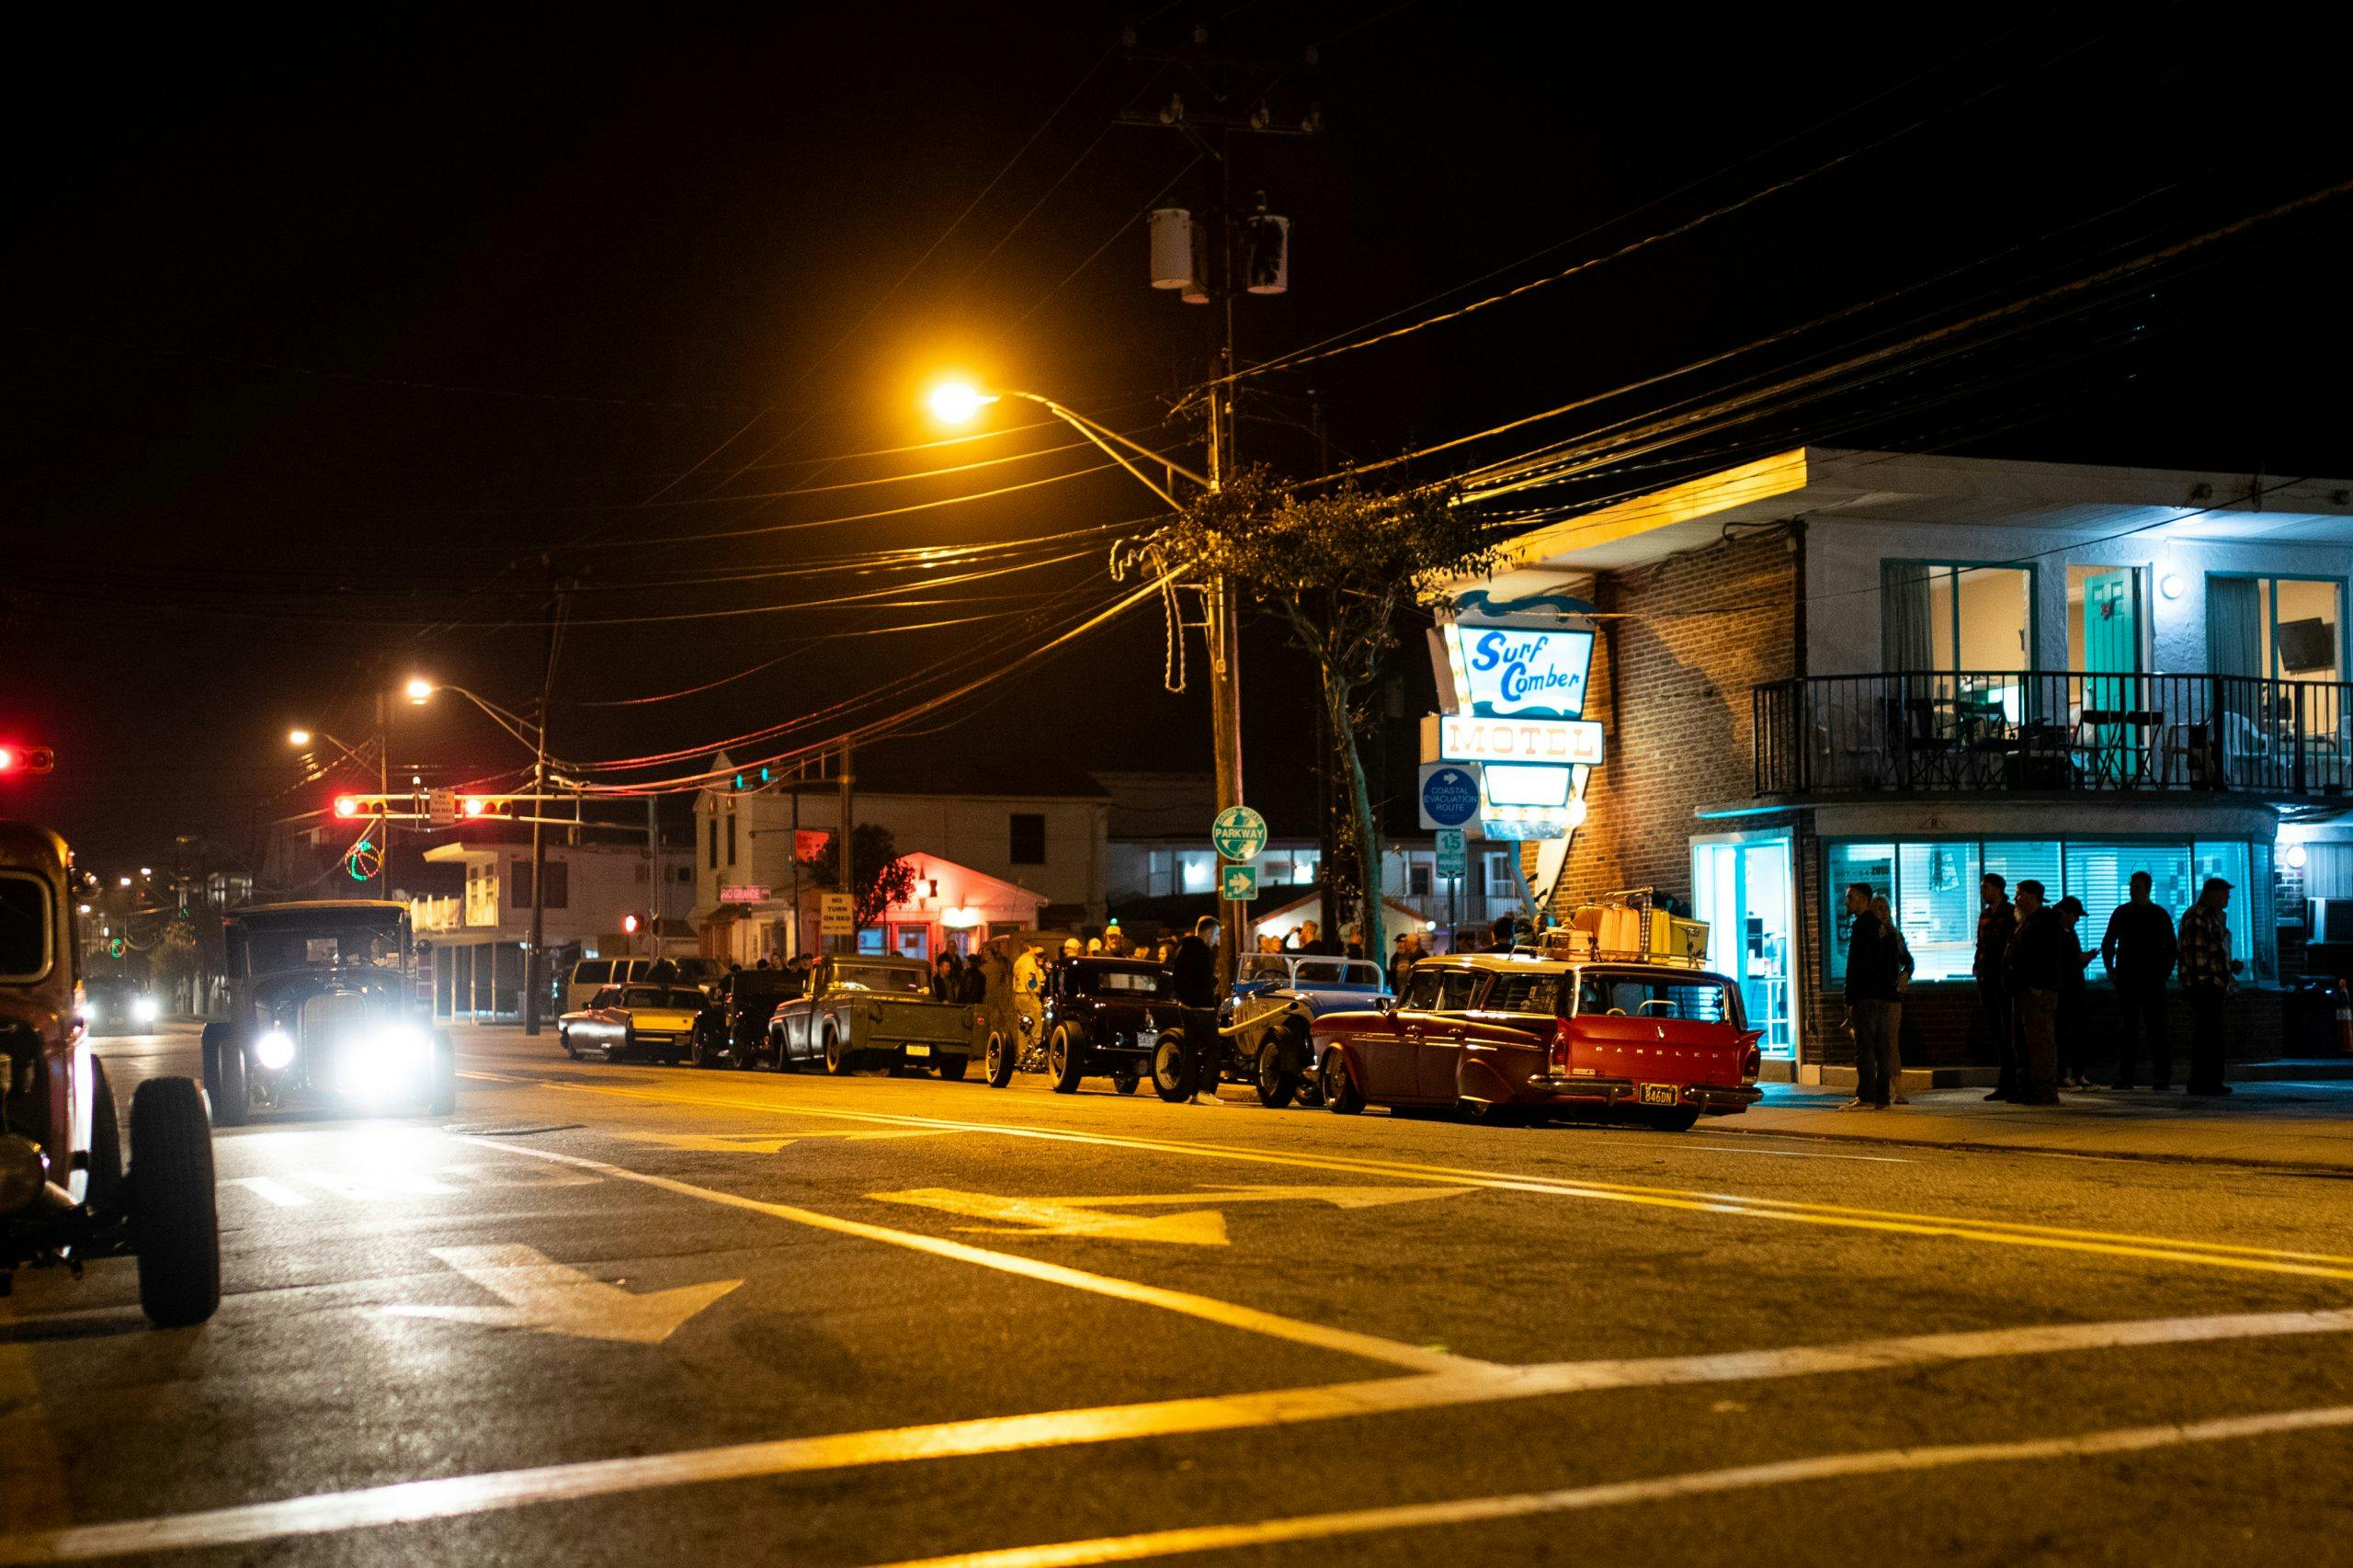 hot rod lined street at night